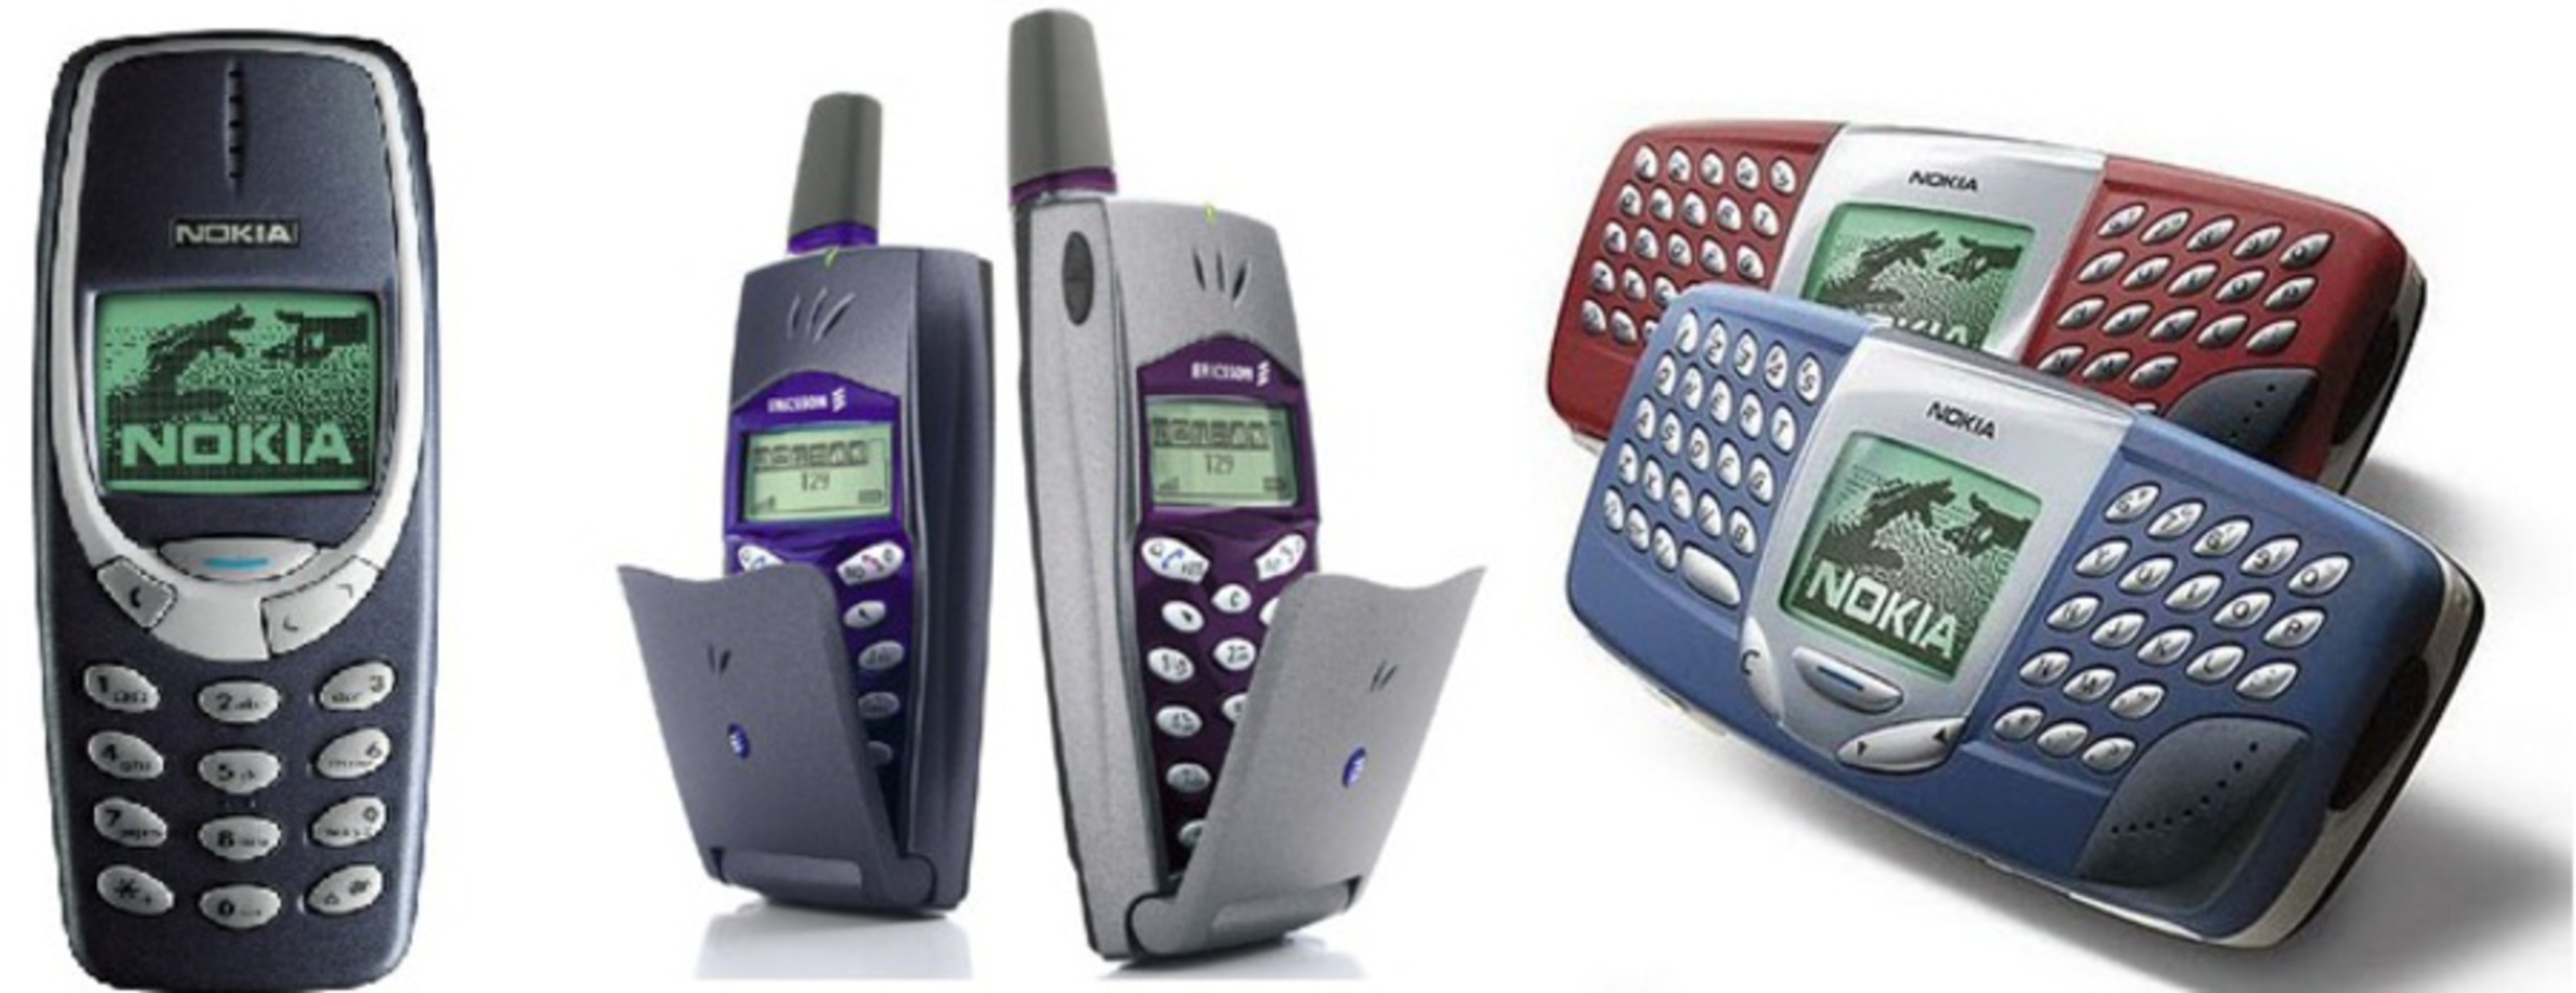 Mobile phones 2001.thumb